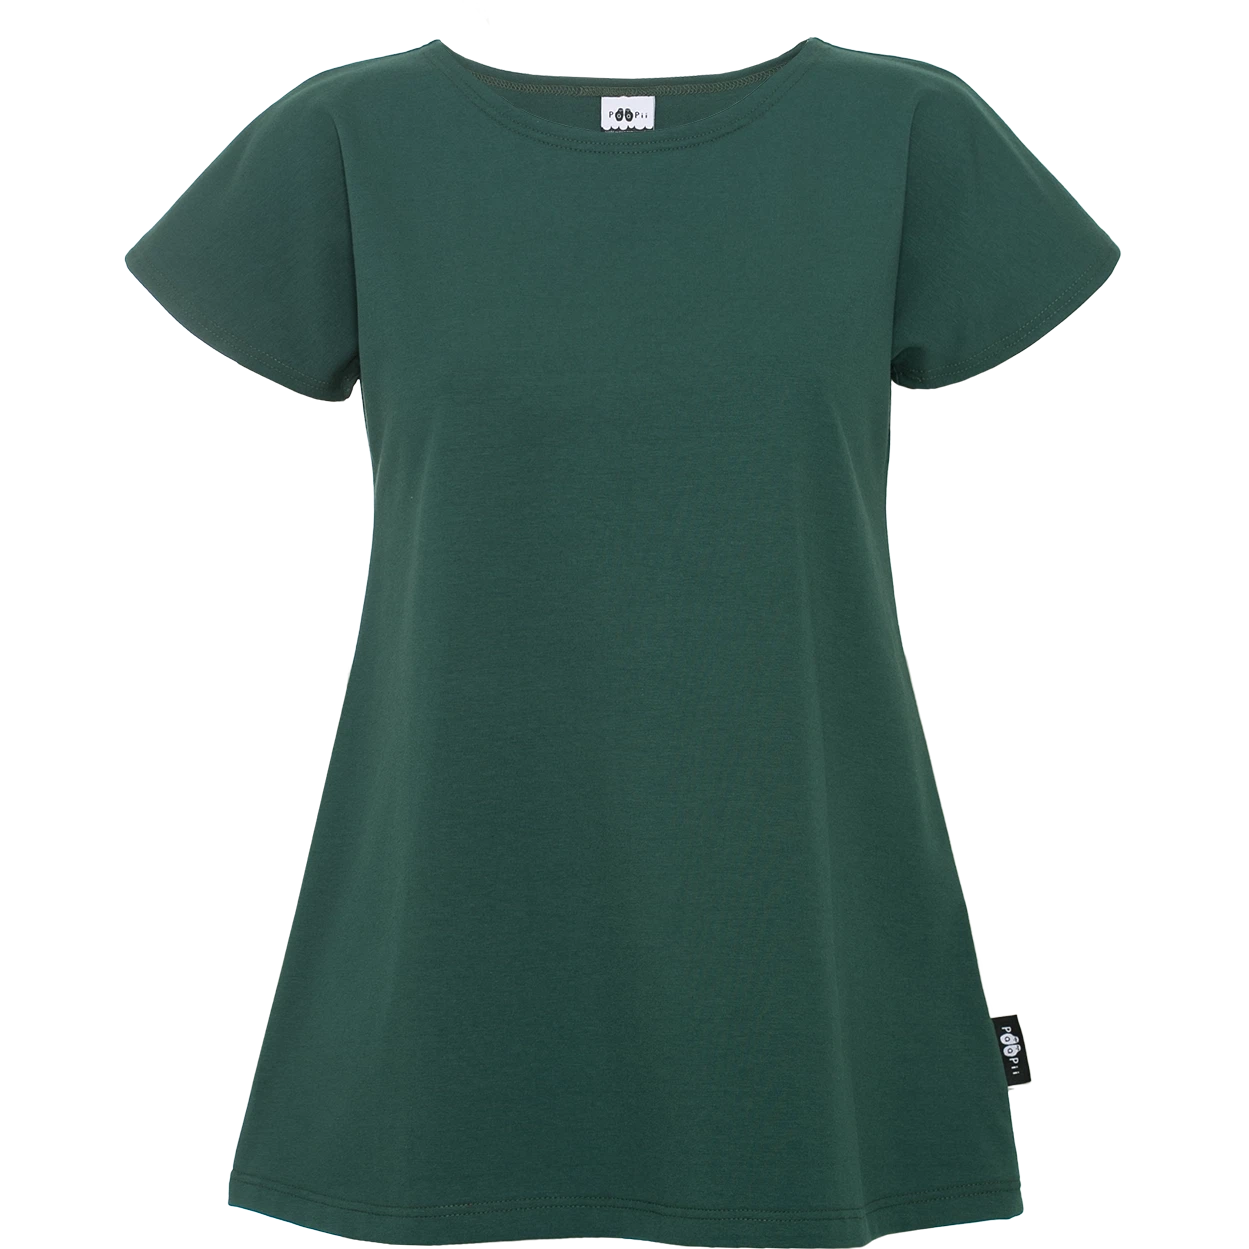 Adult's VUONO Short Sleeve Shirt - Dark Green-PaaPii-Modern Rascals